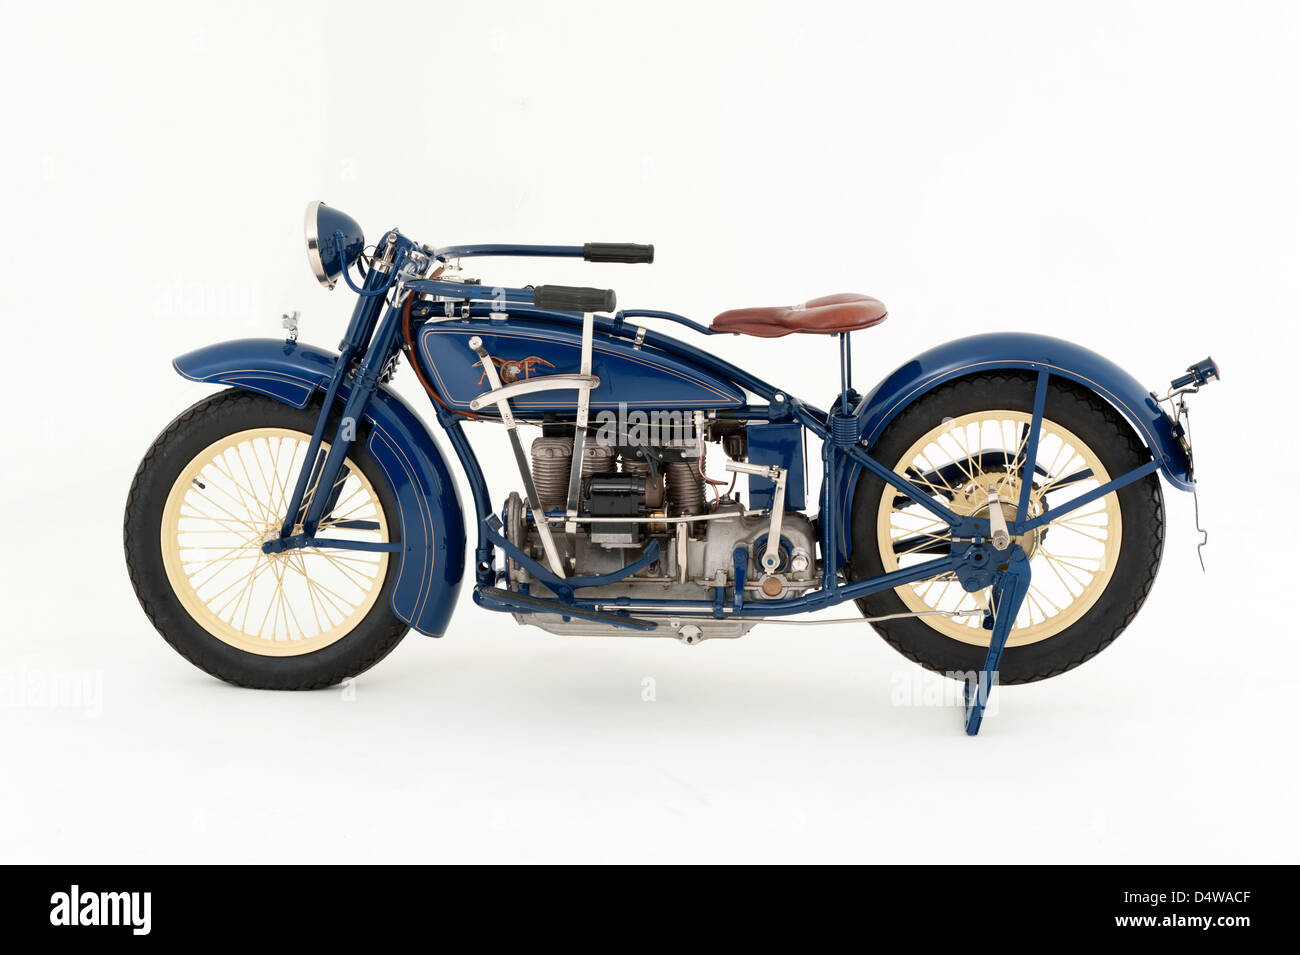 1923 motocicleta de Ace Foto de stock